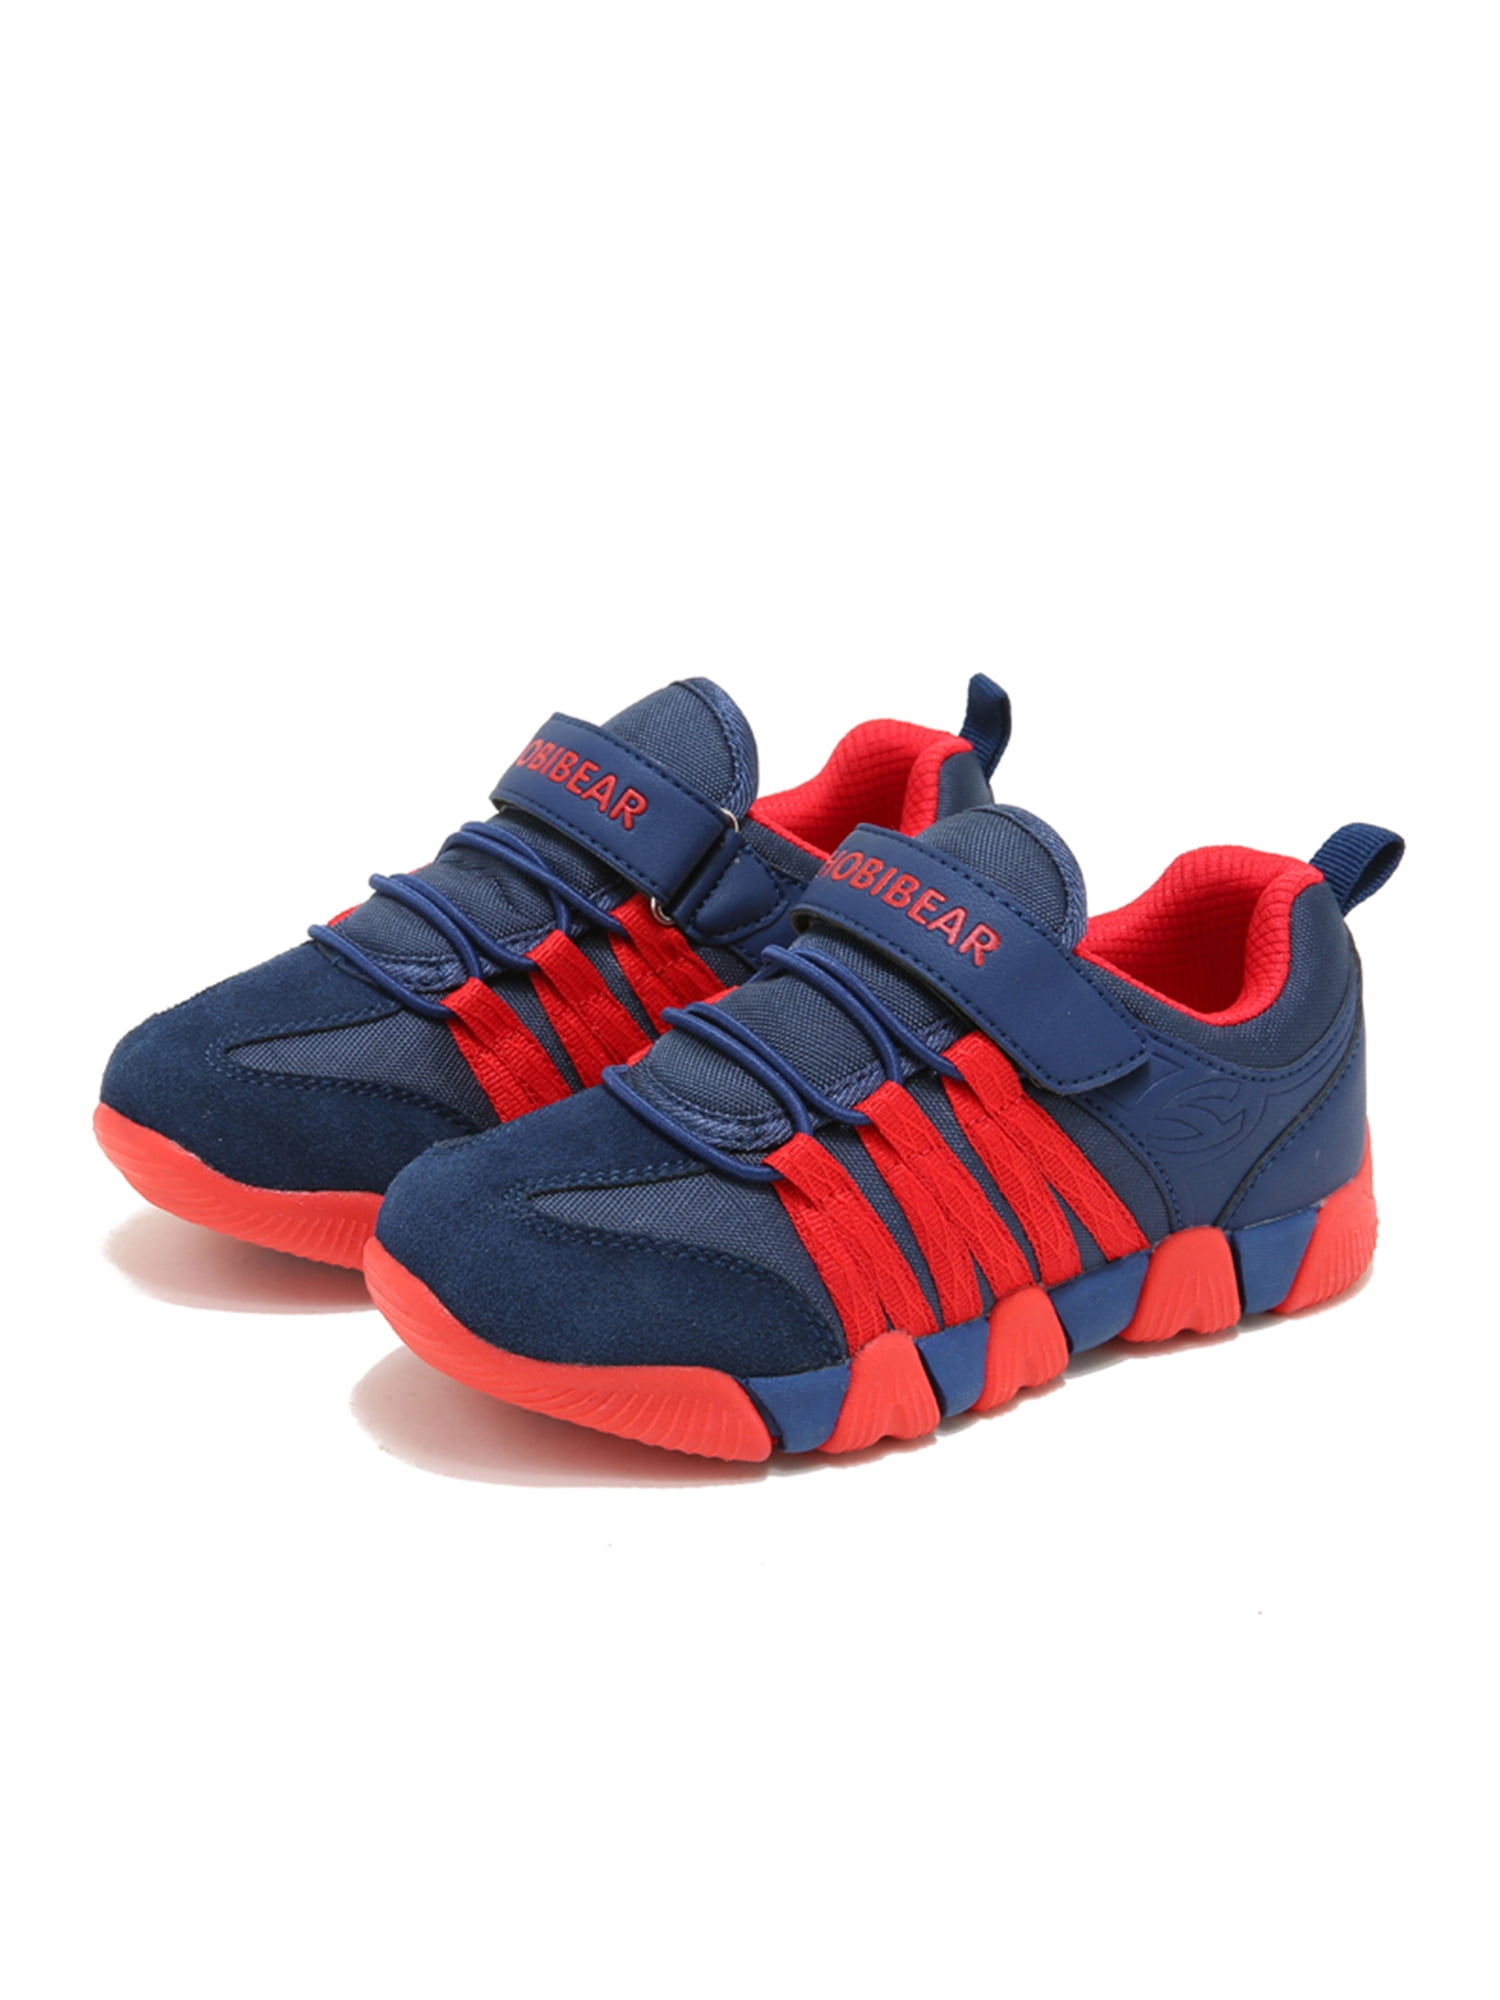 Little Kids/Big Kids Kids Boys Girls Hook and Loop Casual Sneakers Breathable Sport Running Shoes